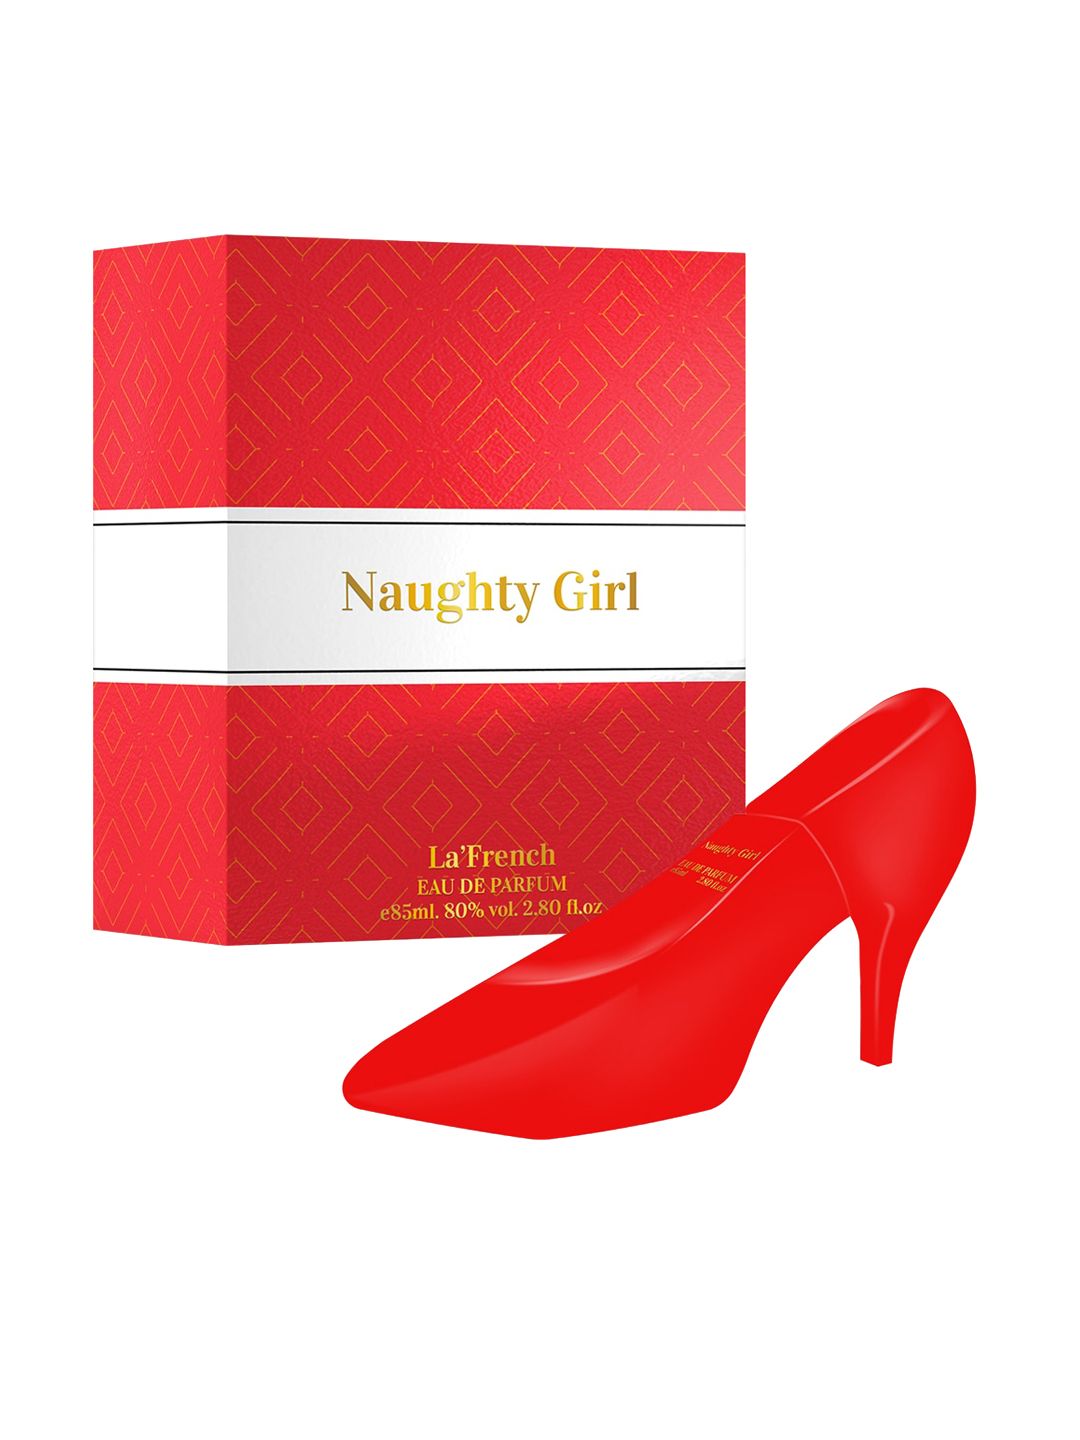 La French Naughty Girl Perfume 85 ml Price in India